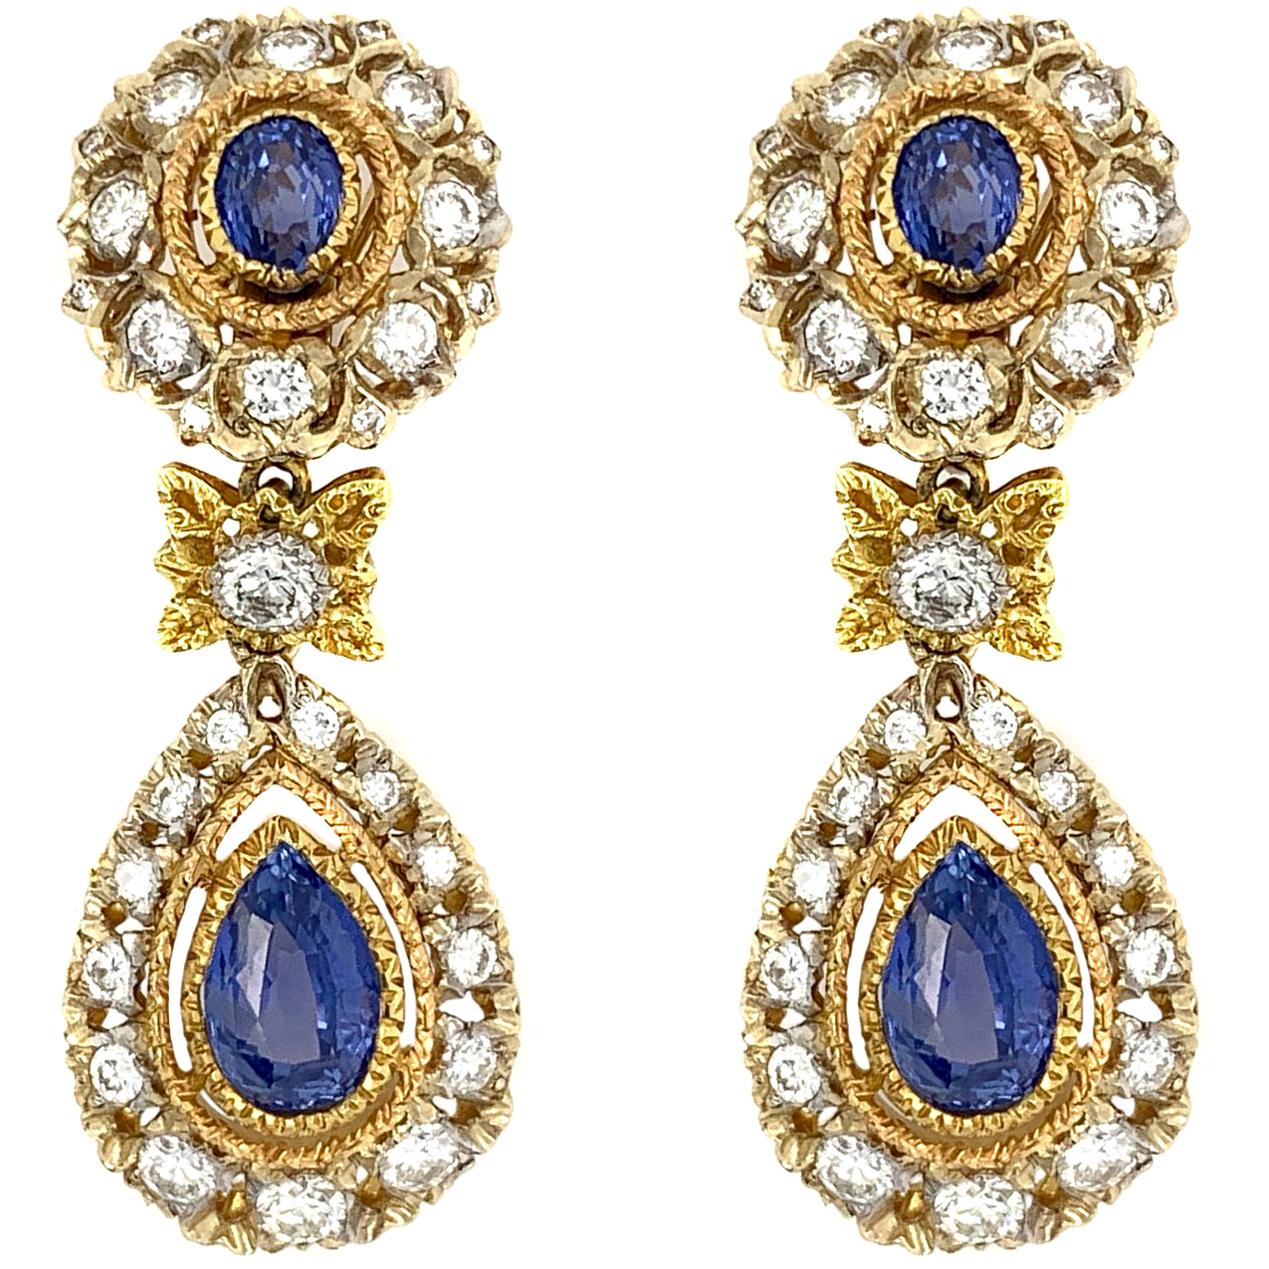 Mario Buccellati 18 Karat White and Yellow Gold Diamond and Sapphire Earrings